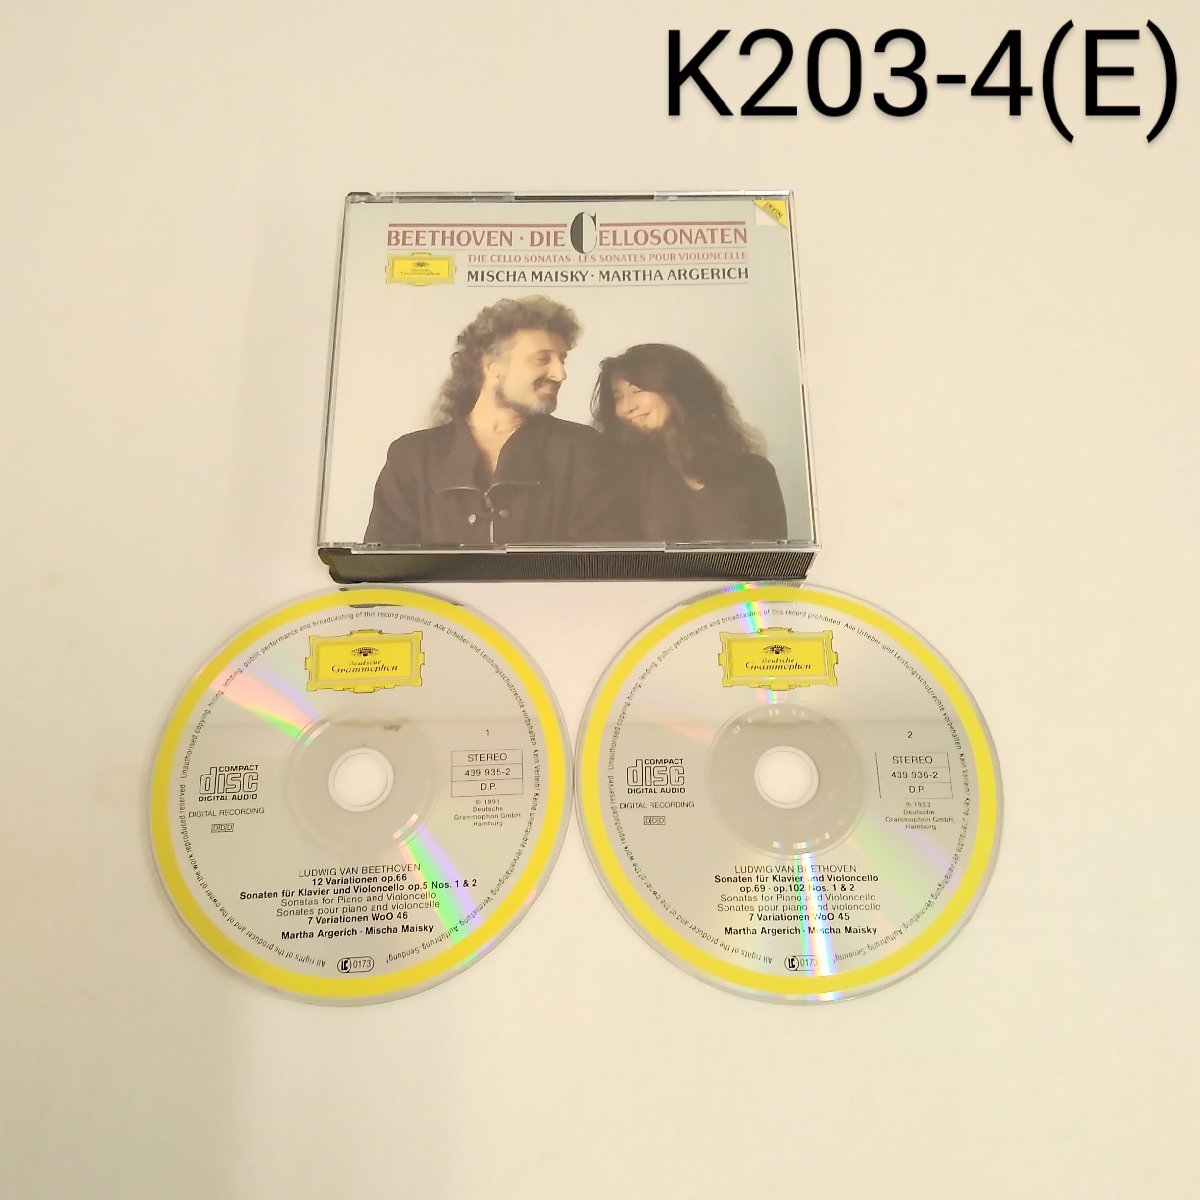 CD まとめ売り 5組セット 8枚セット クラシック 洋楽 ベートーヴェン ドイツ・グラモフォンK203o-t(E)_画像4